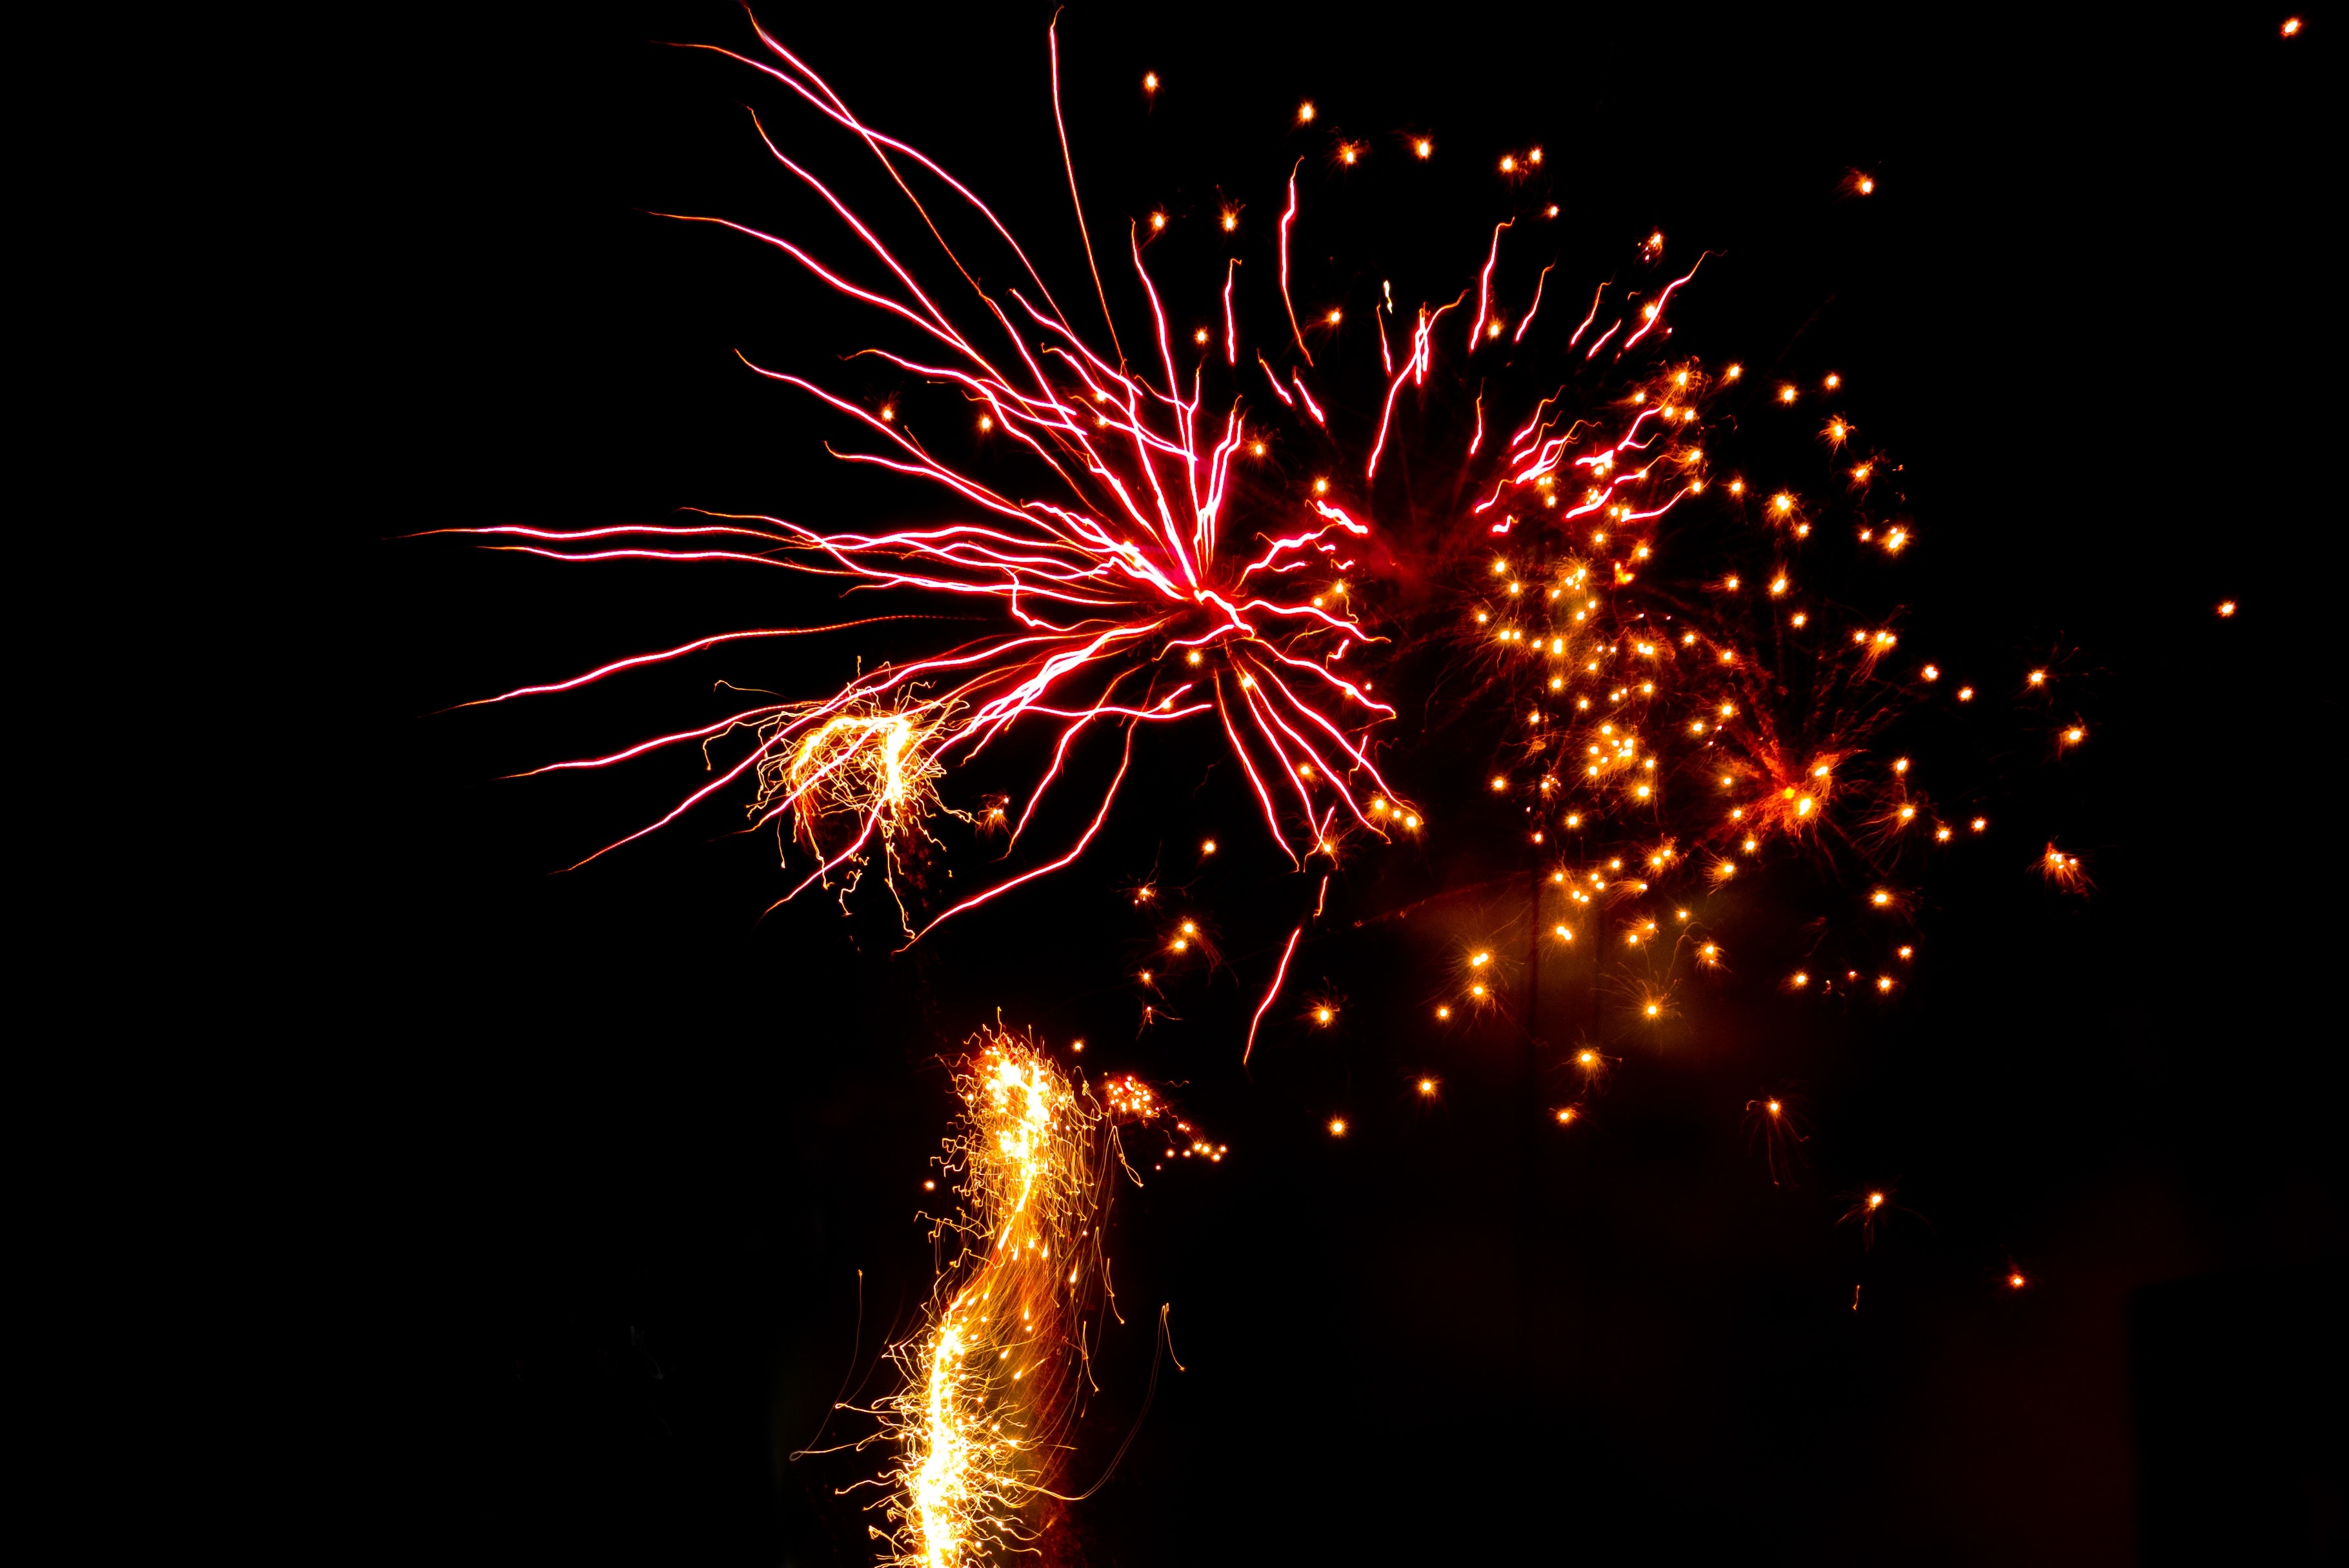 Fireworks, New Year'S Eve, Sylvester, firework display, firework - man made object